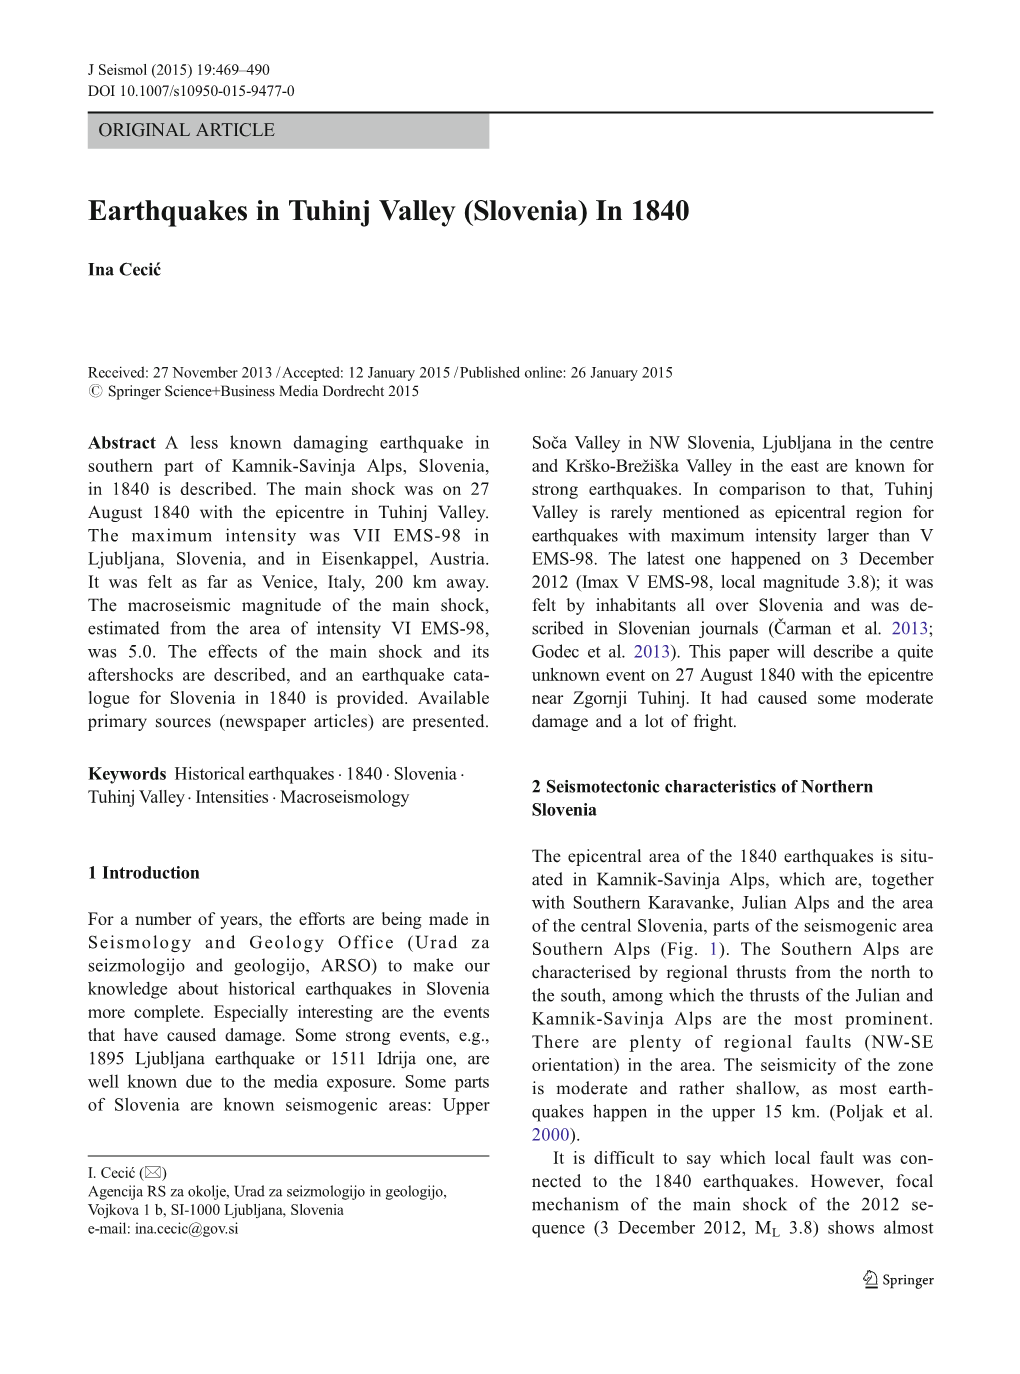 Earthquakes in Tuhinj Valley (Slovenia) in 1840